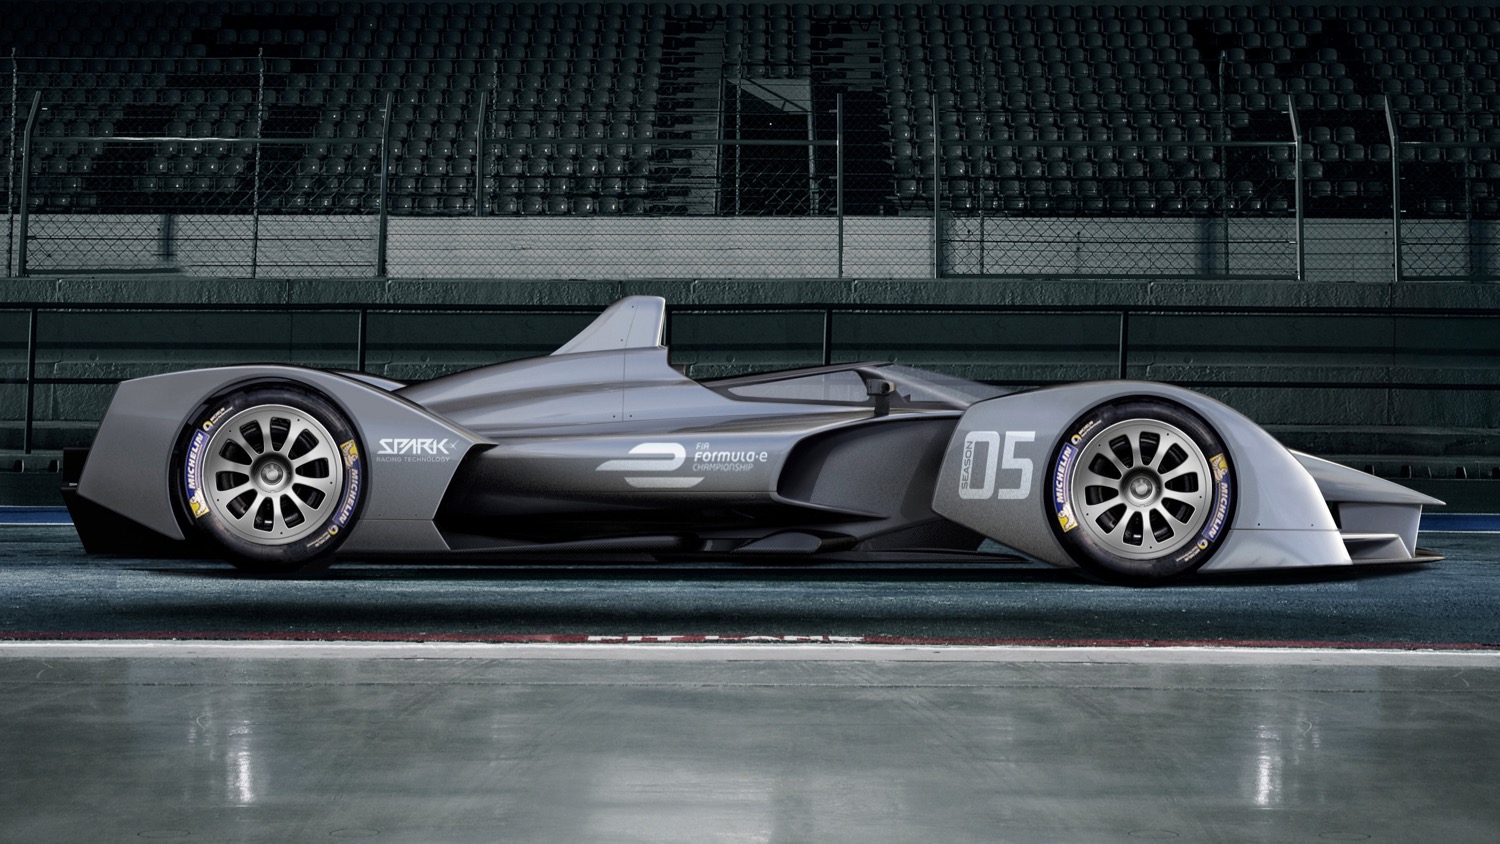 Spark SRT05e Formula E race car concept